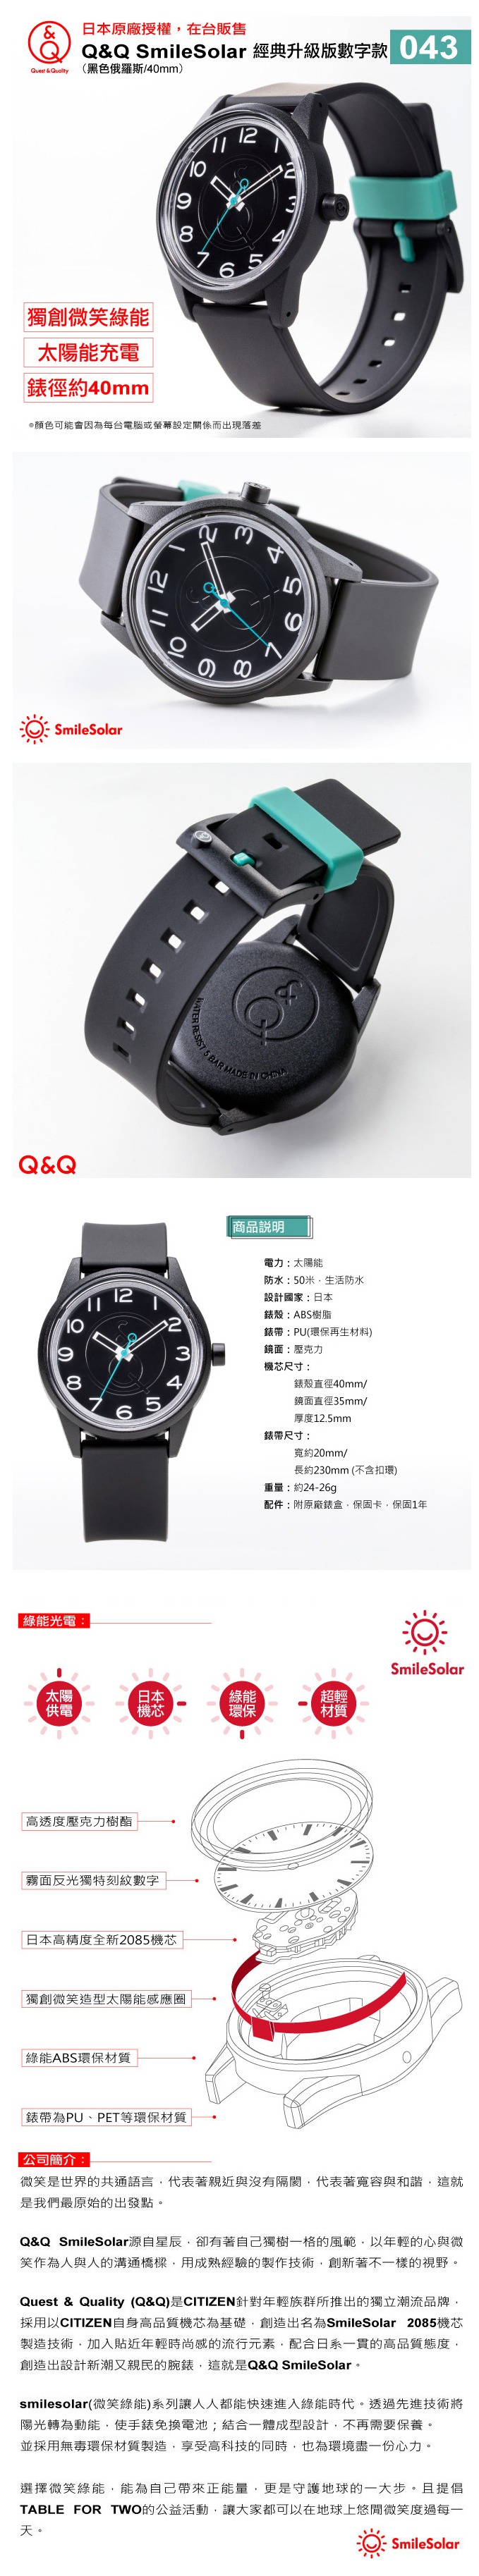 Q＆Q SmileSolar 經典升級數字款 太陽能手錶 (043 黑色俄羅斯/40mm)